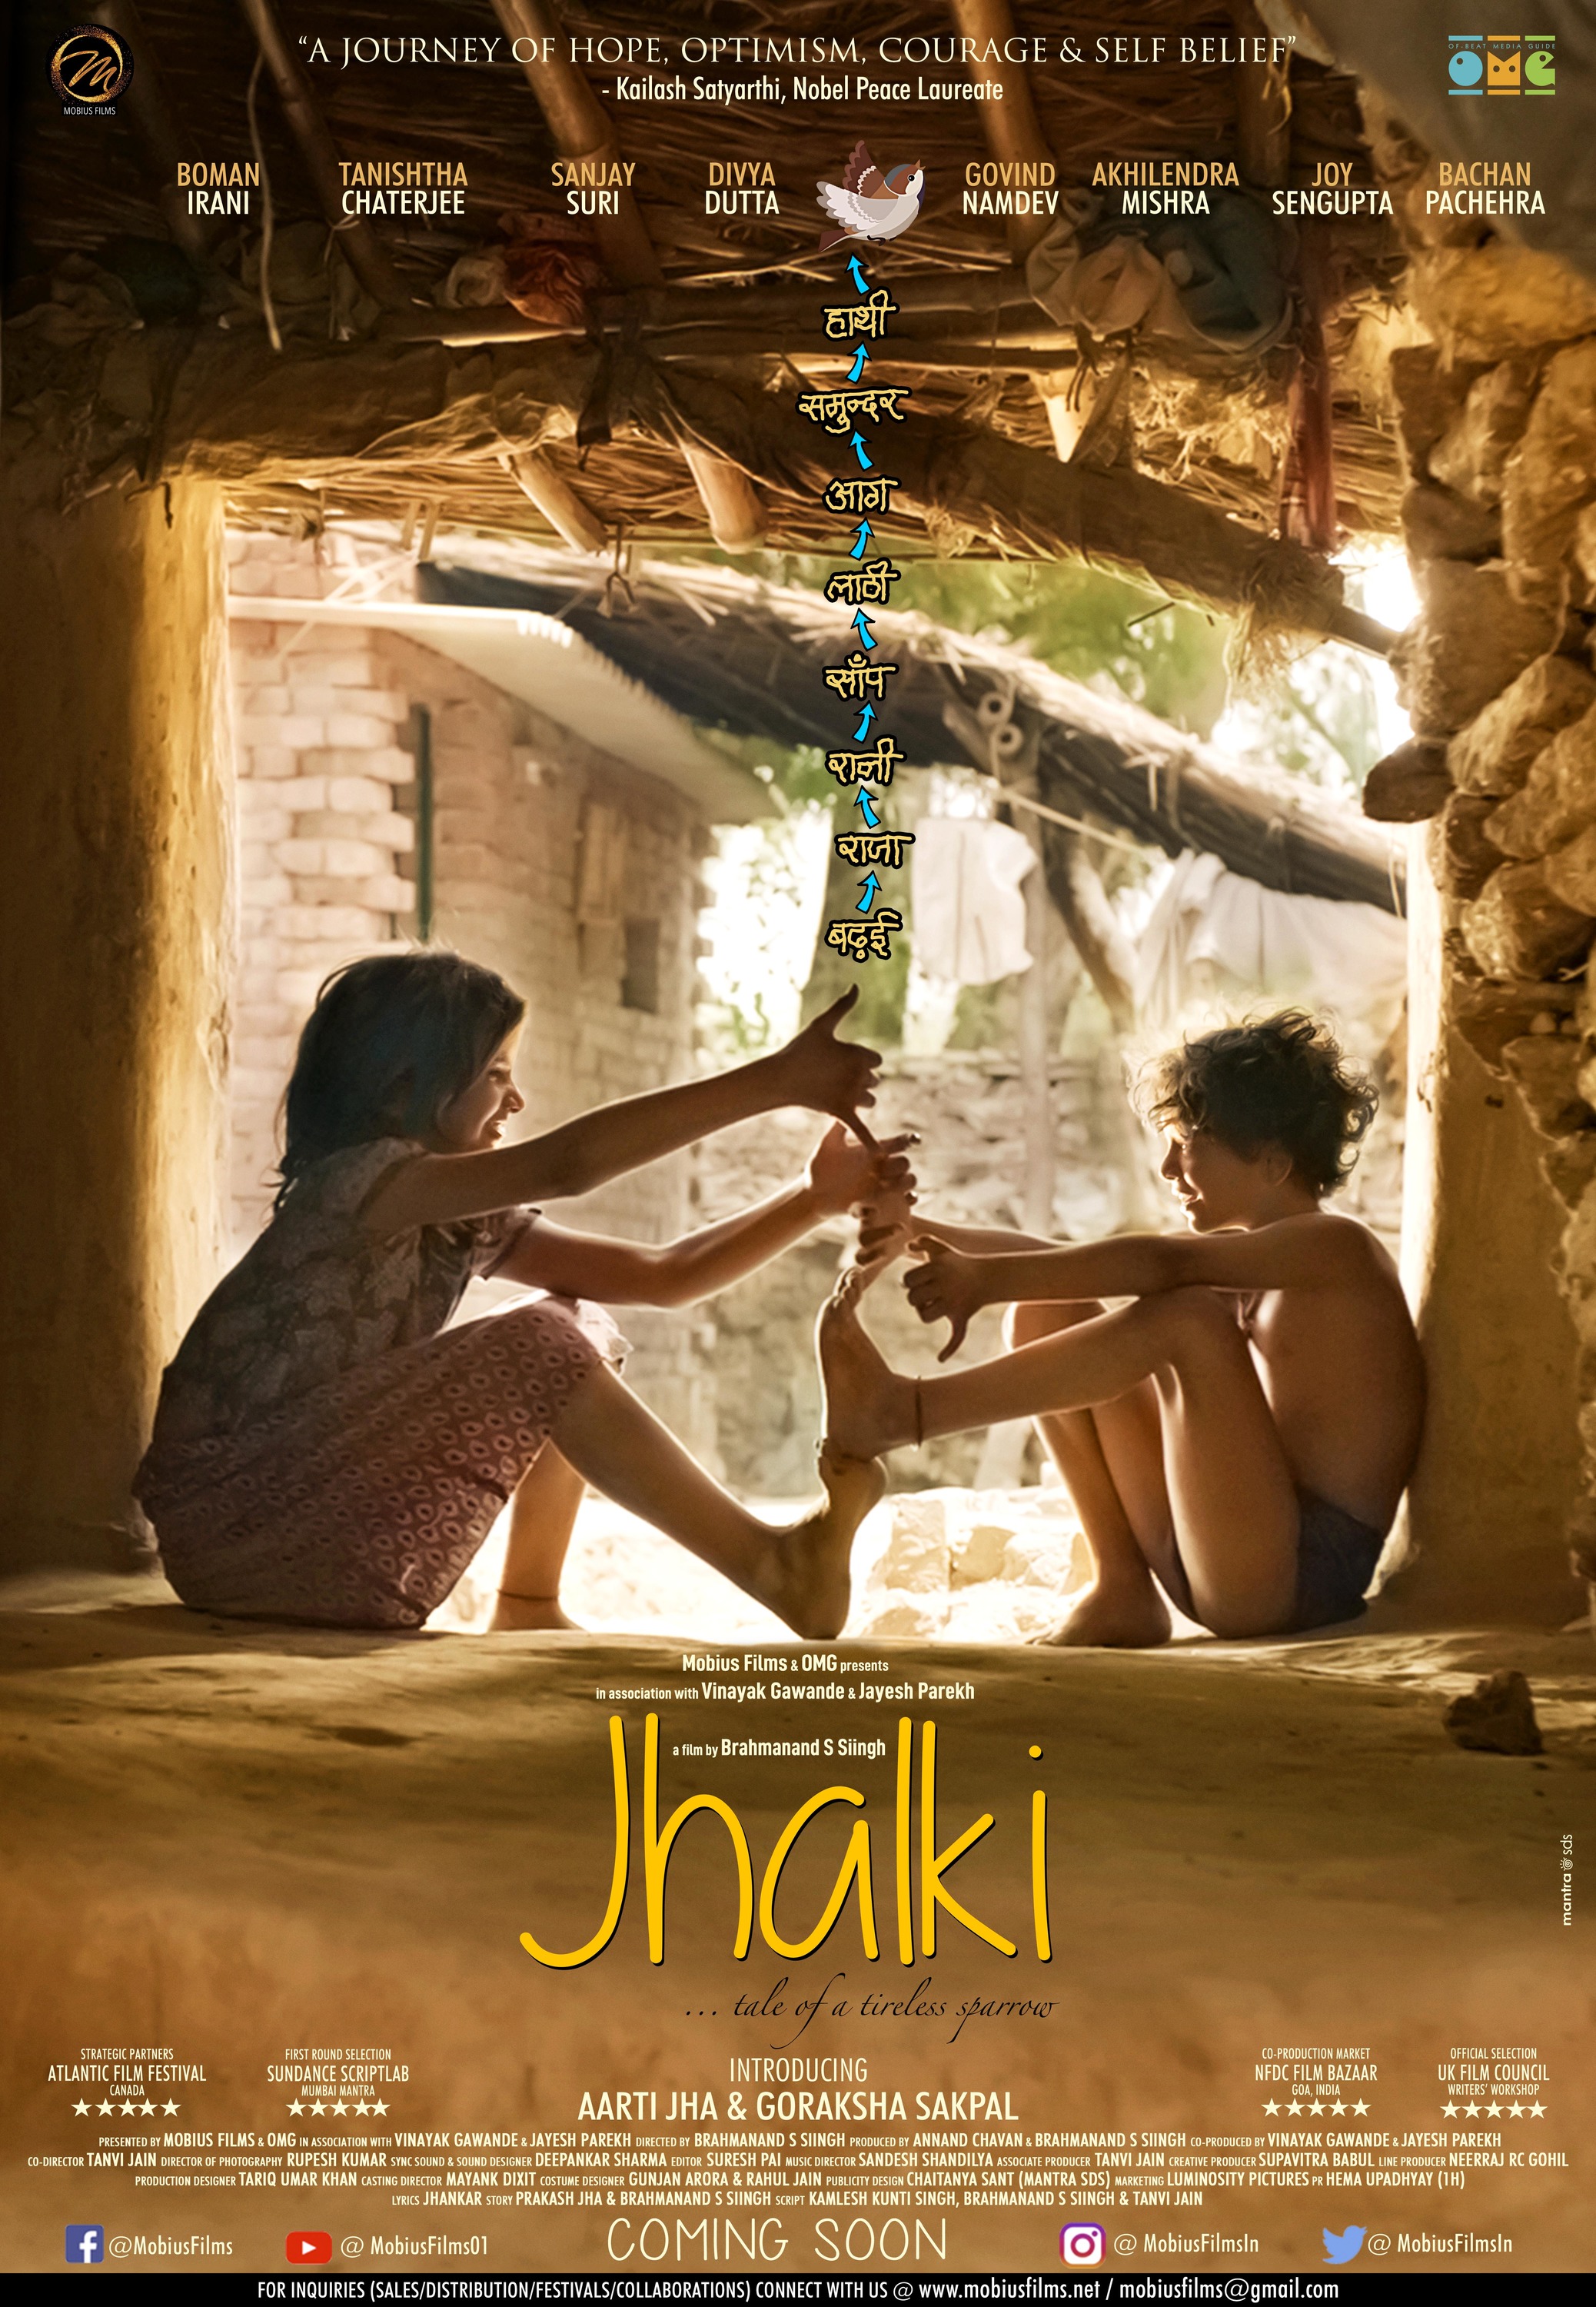 Mega Sized Movie Poster Image for Jhalki ... A Different Childhood (#2 of 2)